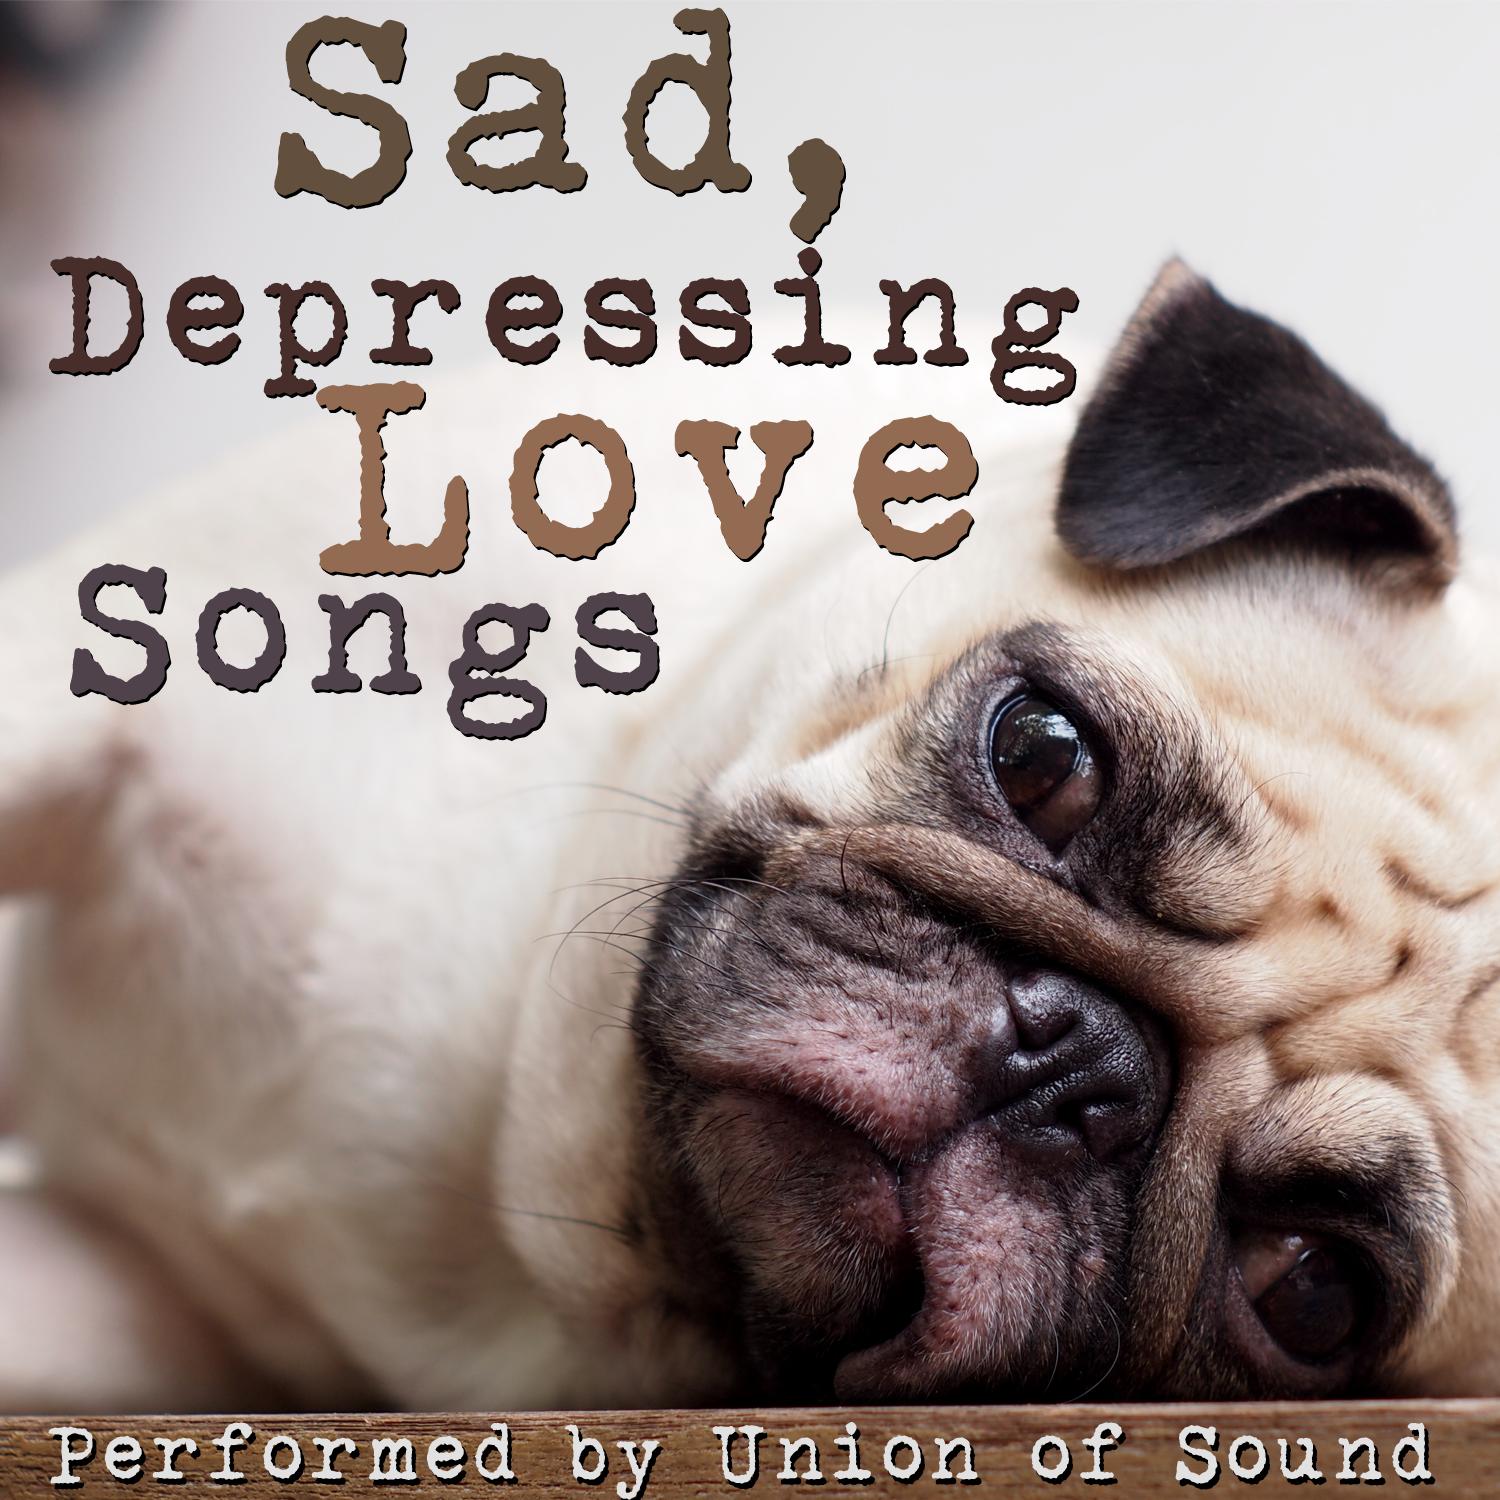 Sad, Depressing Love Songs